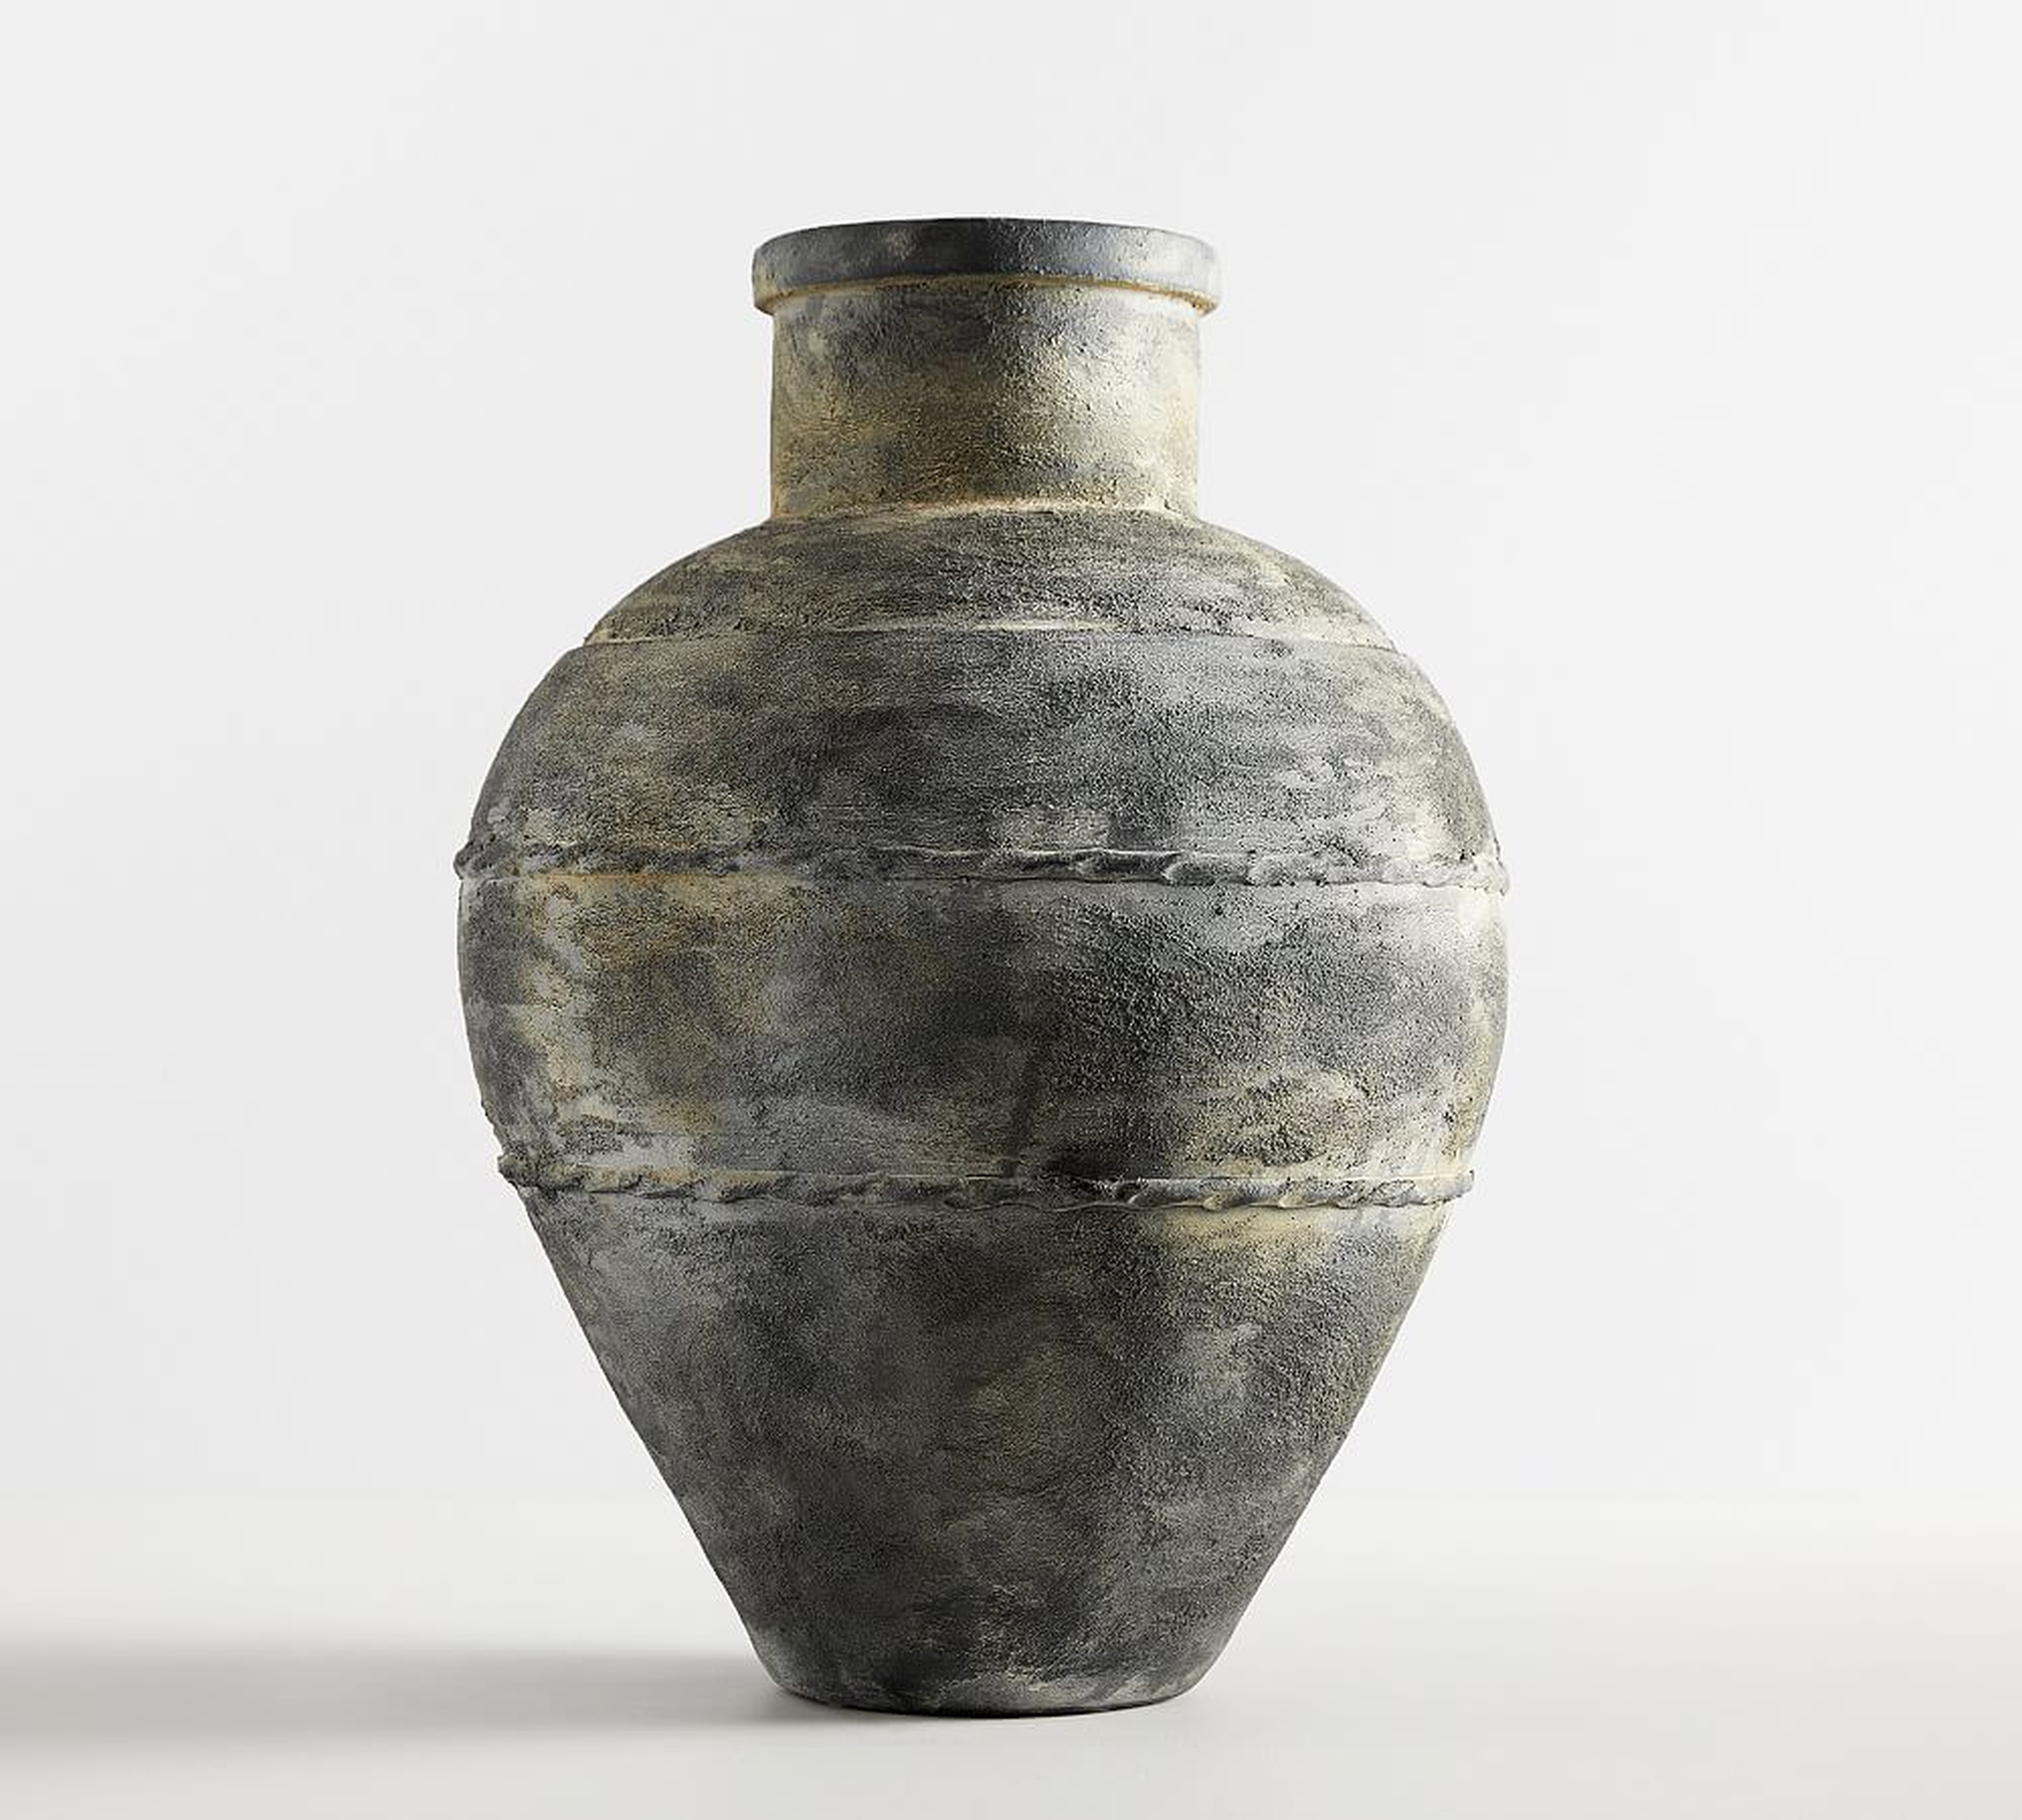 Black Vase Collection, Black, XL - Pottery Barn